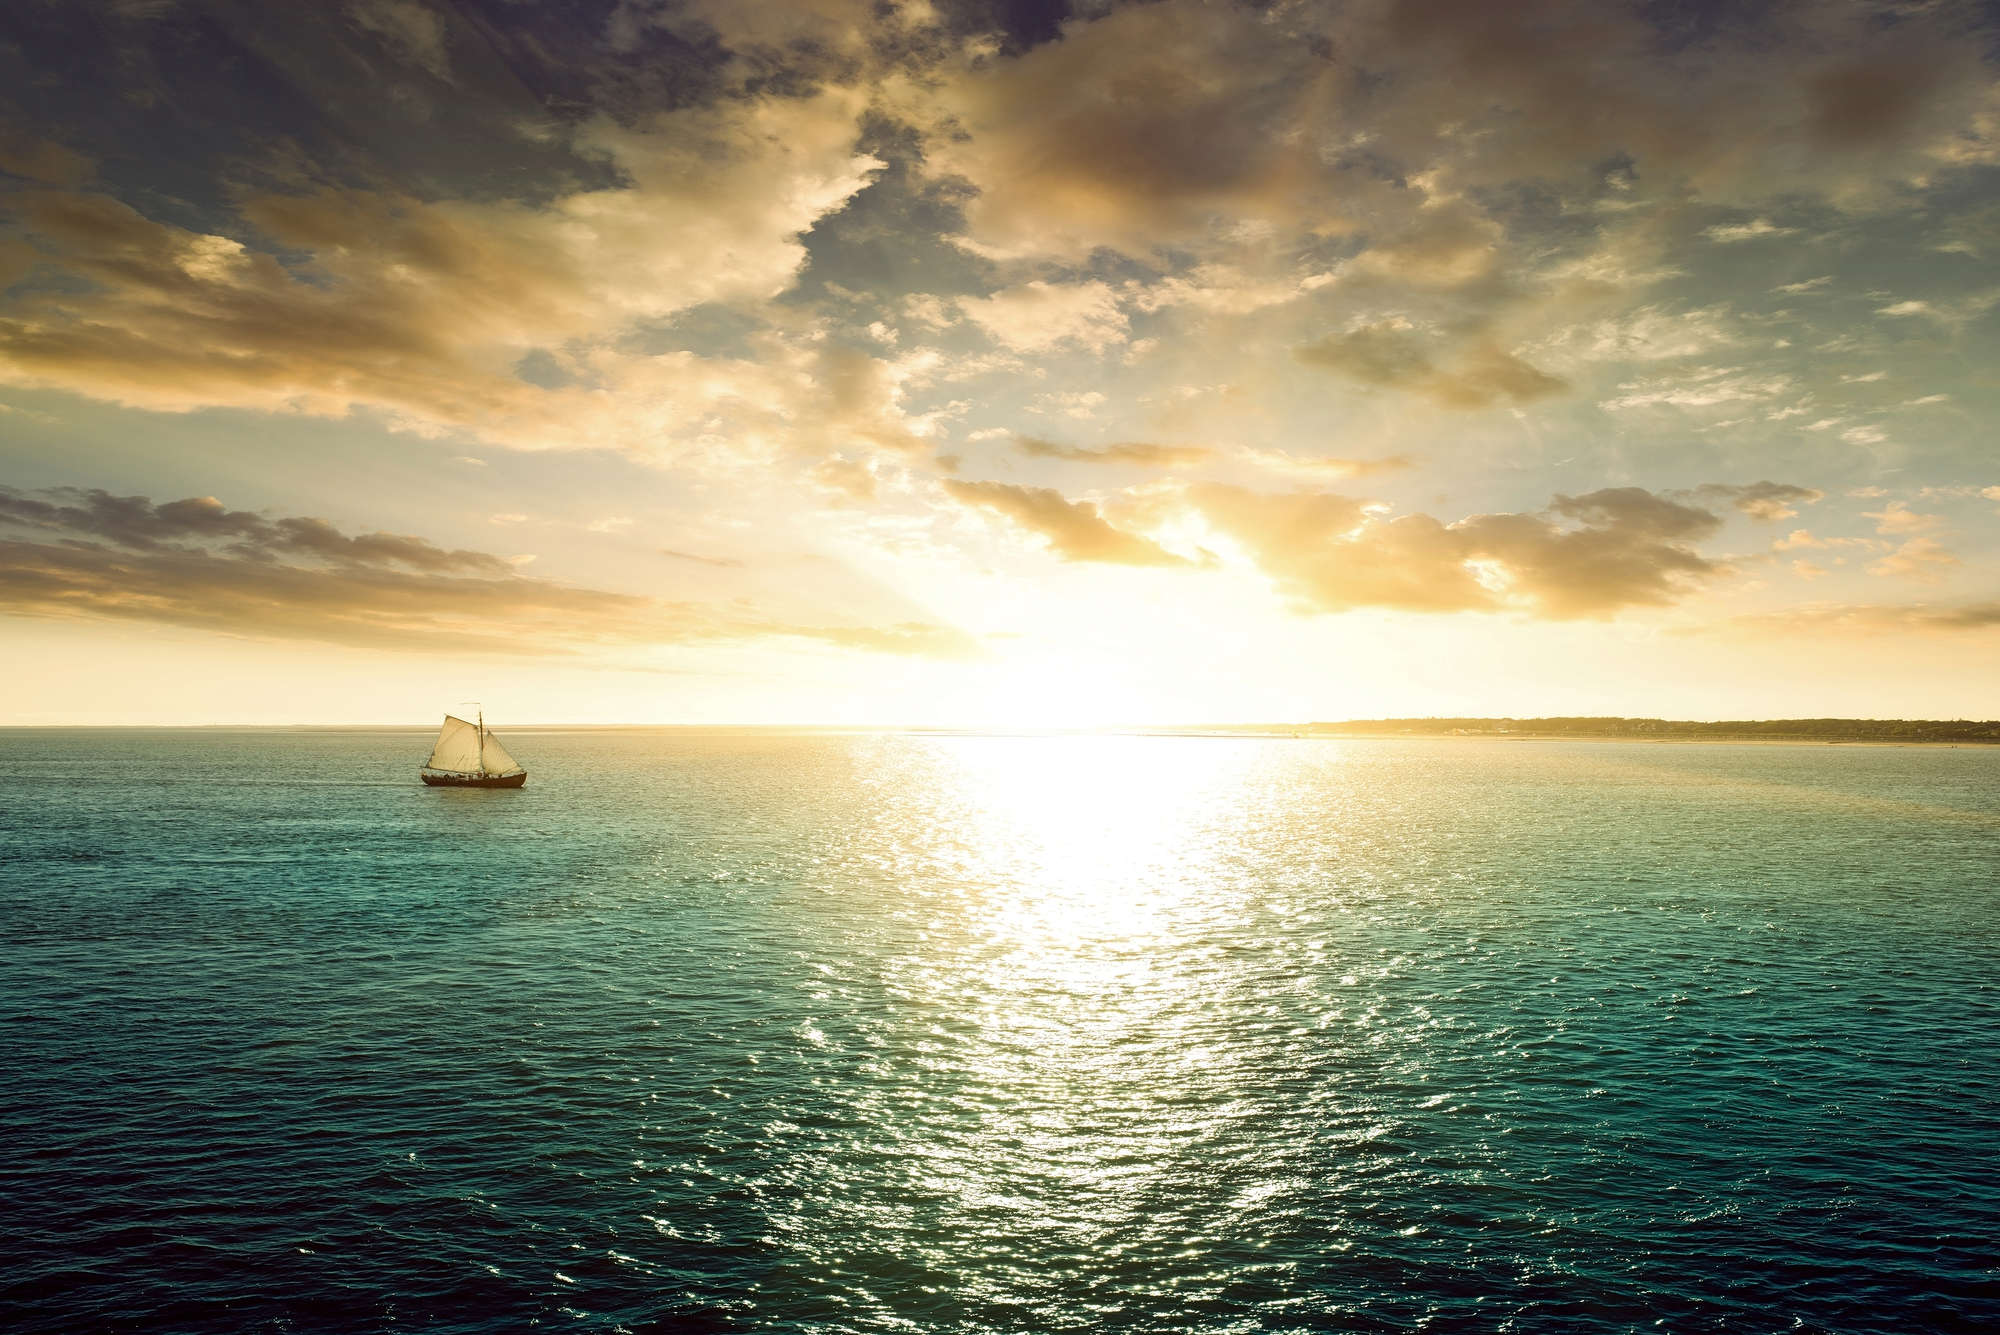             Sea photo wallpaper sailboat at sunset on premium smooth nonwoven
        